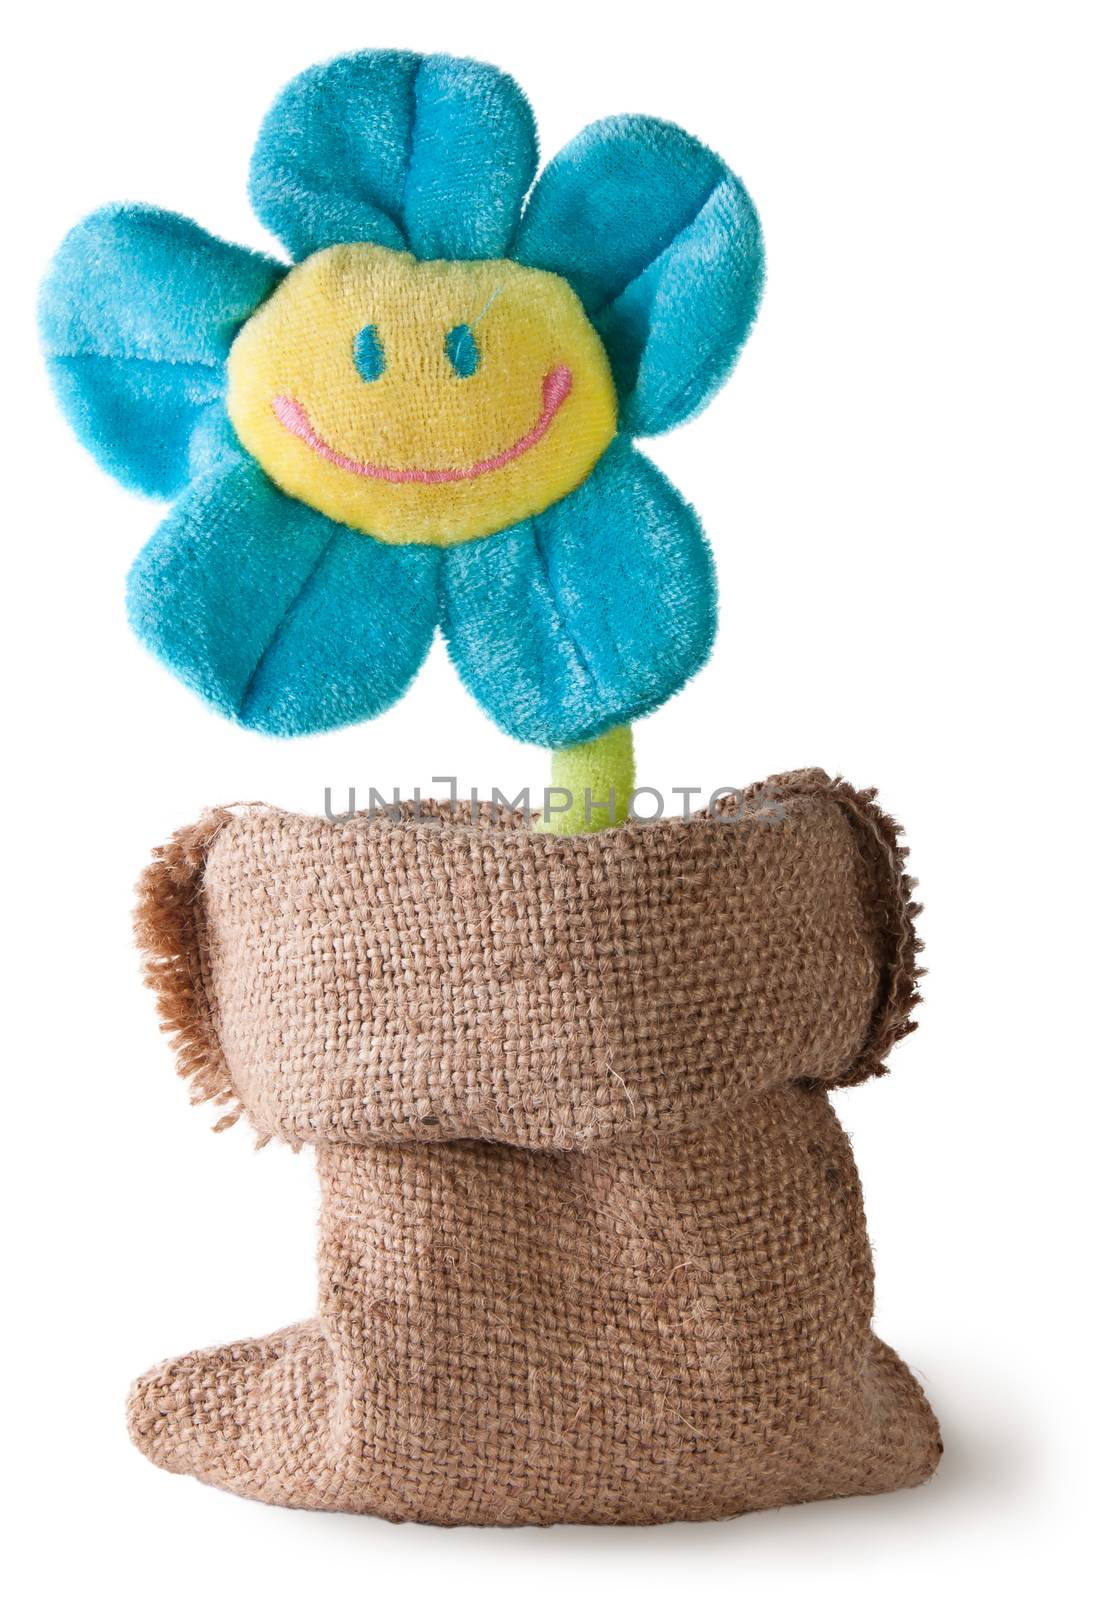 Plush flower in sack by Cipariss